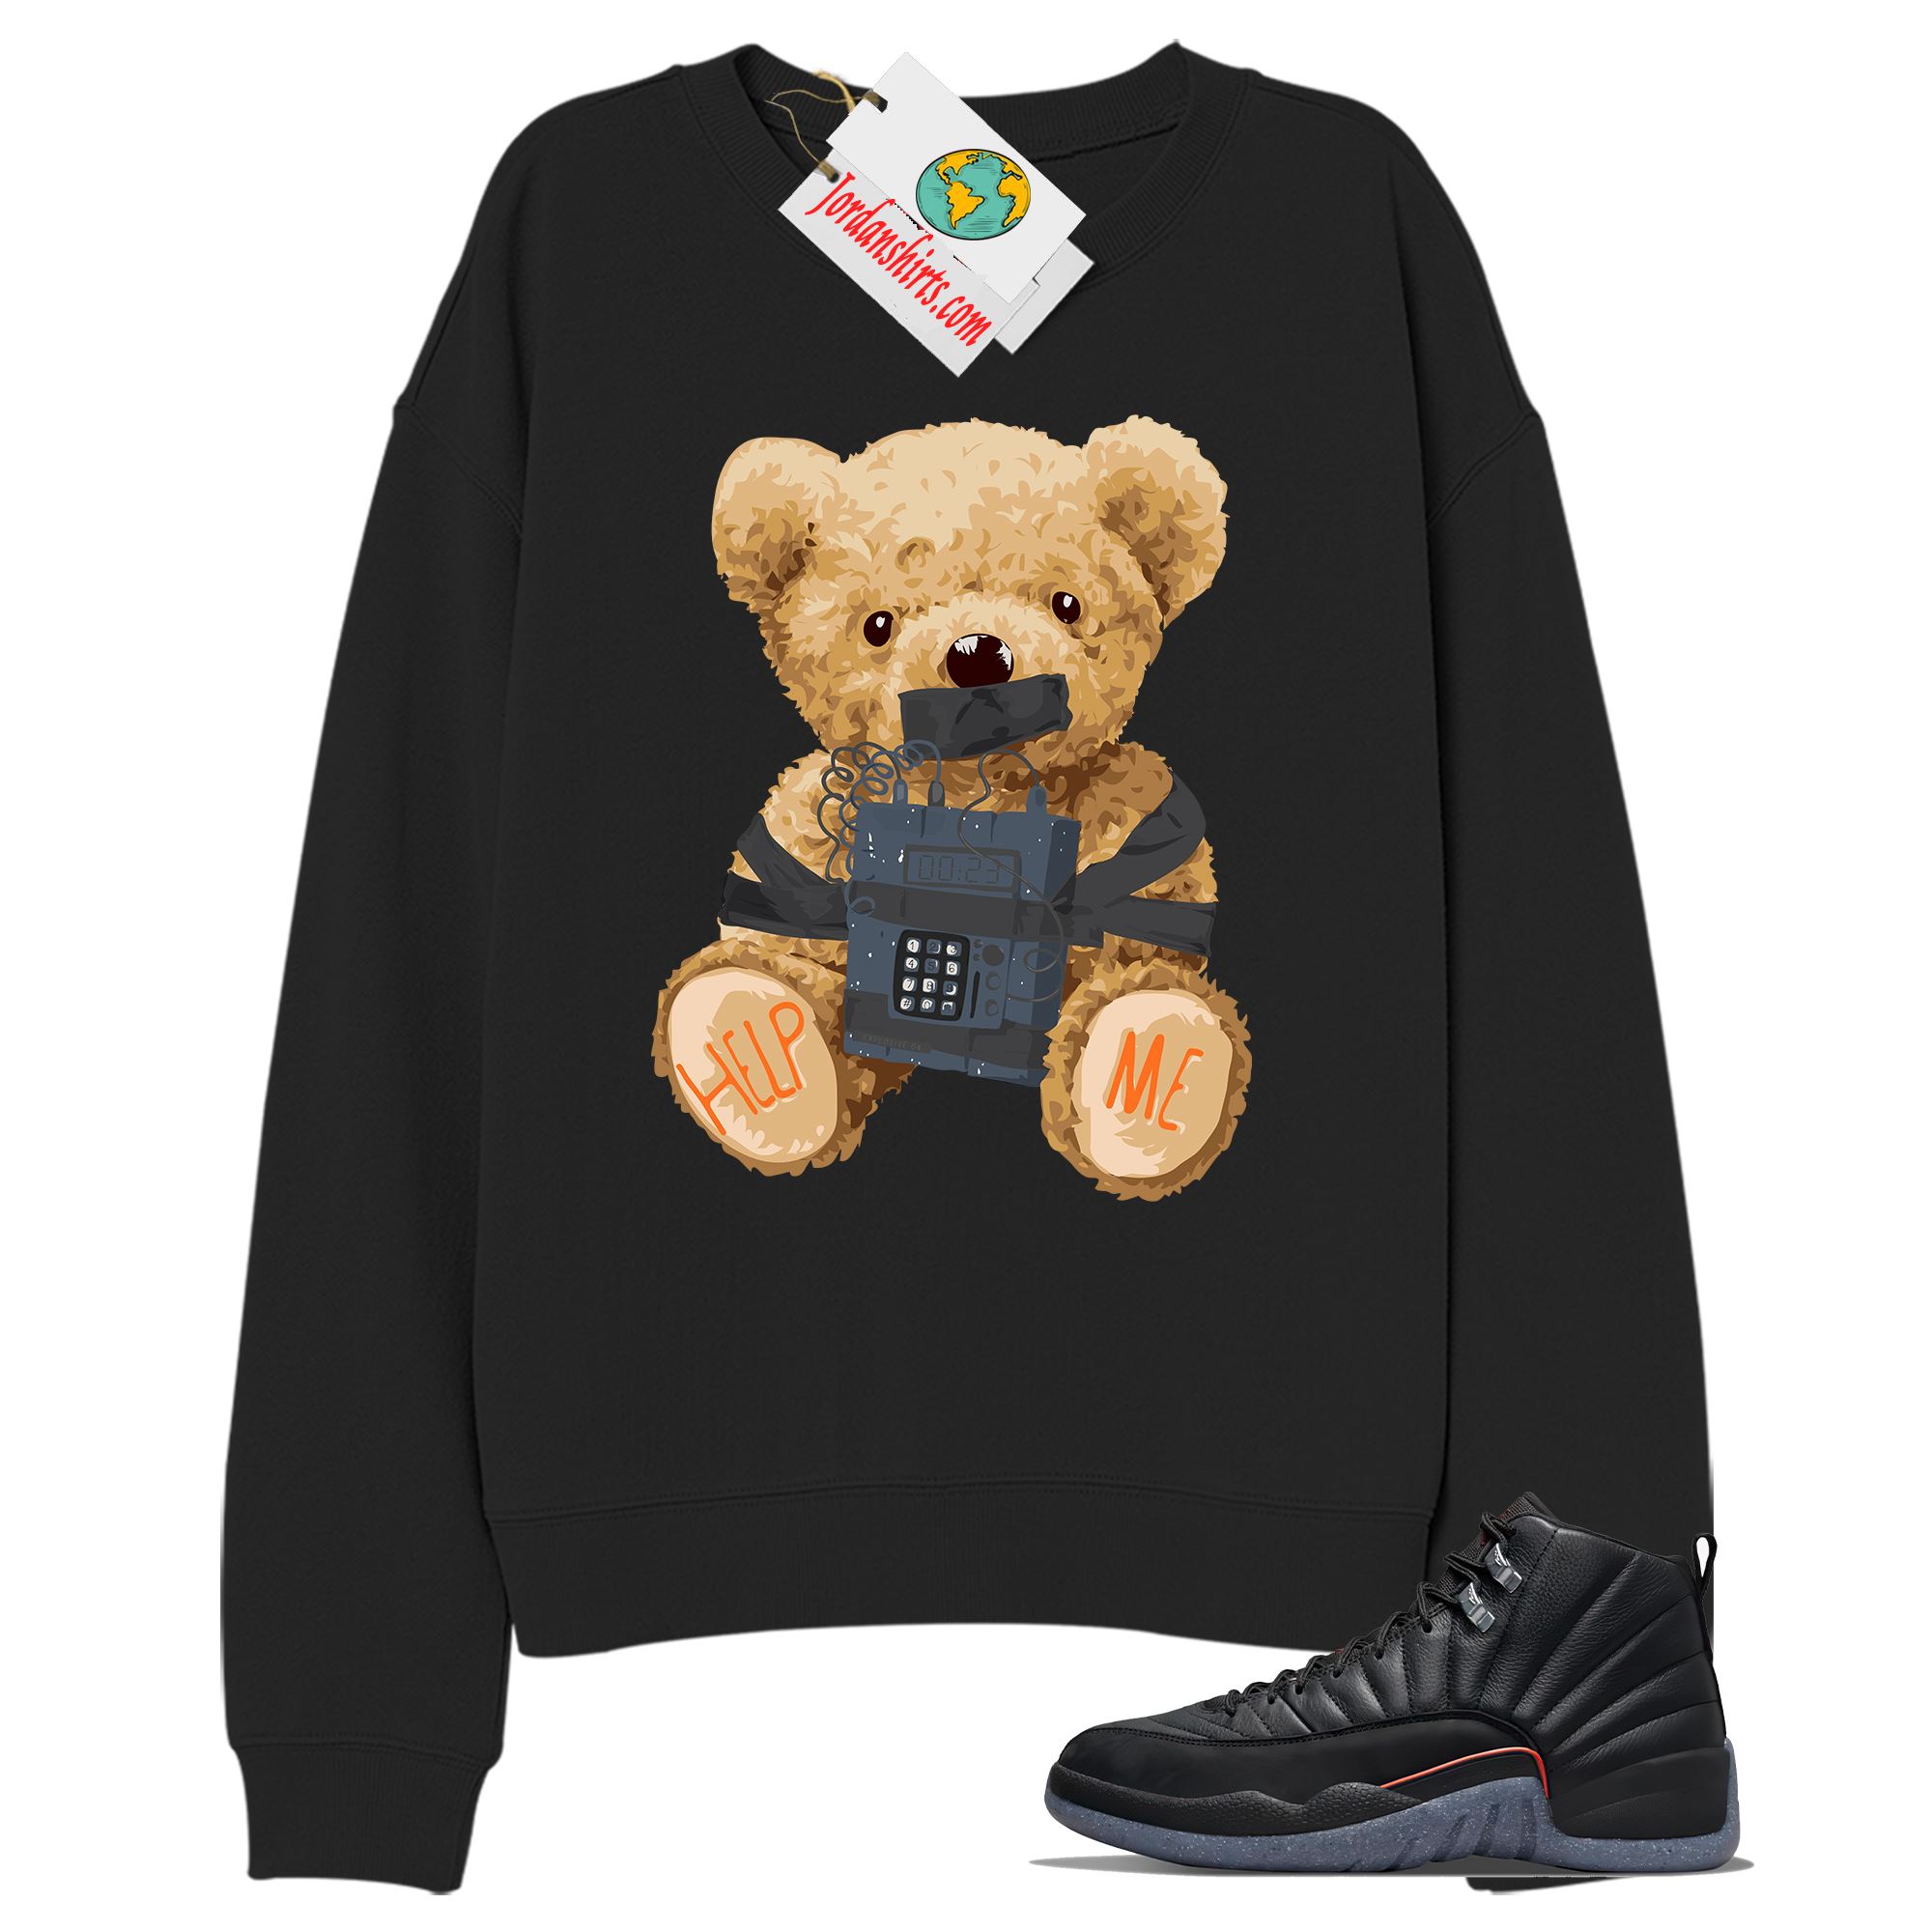 Jordan 12 Sweatshirt, Teddy Bear Bomb Black Sweatshirt Air Jordan 12 Utility Grind 12s Plus Size Up To 5xl